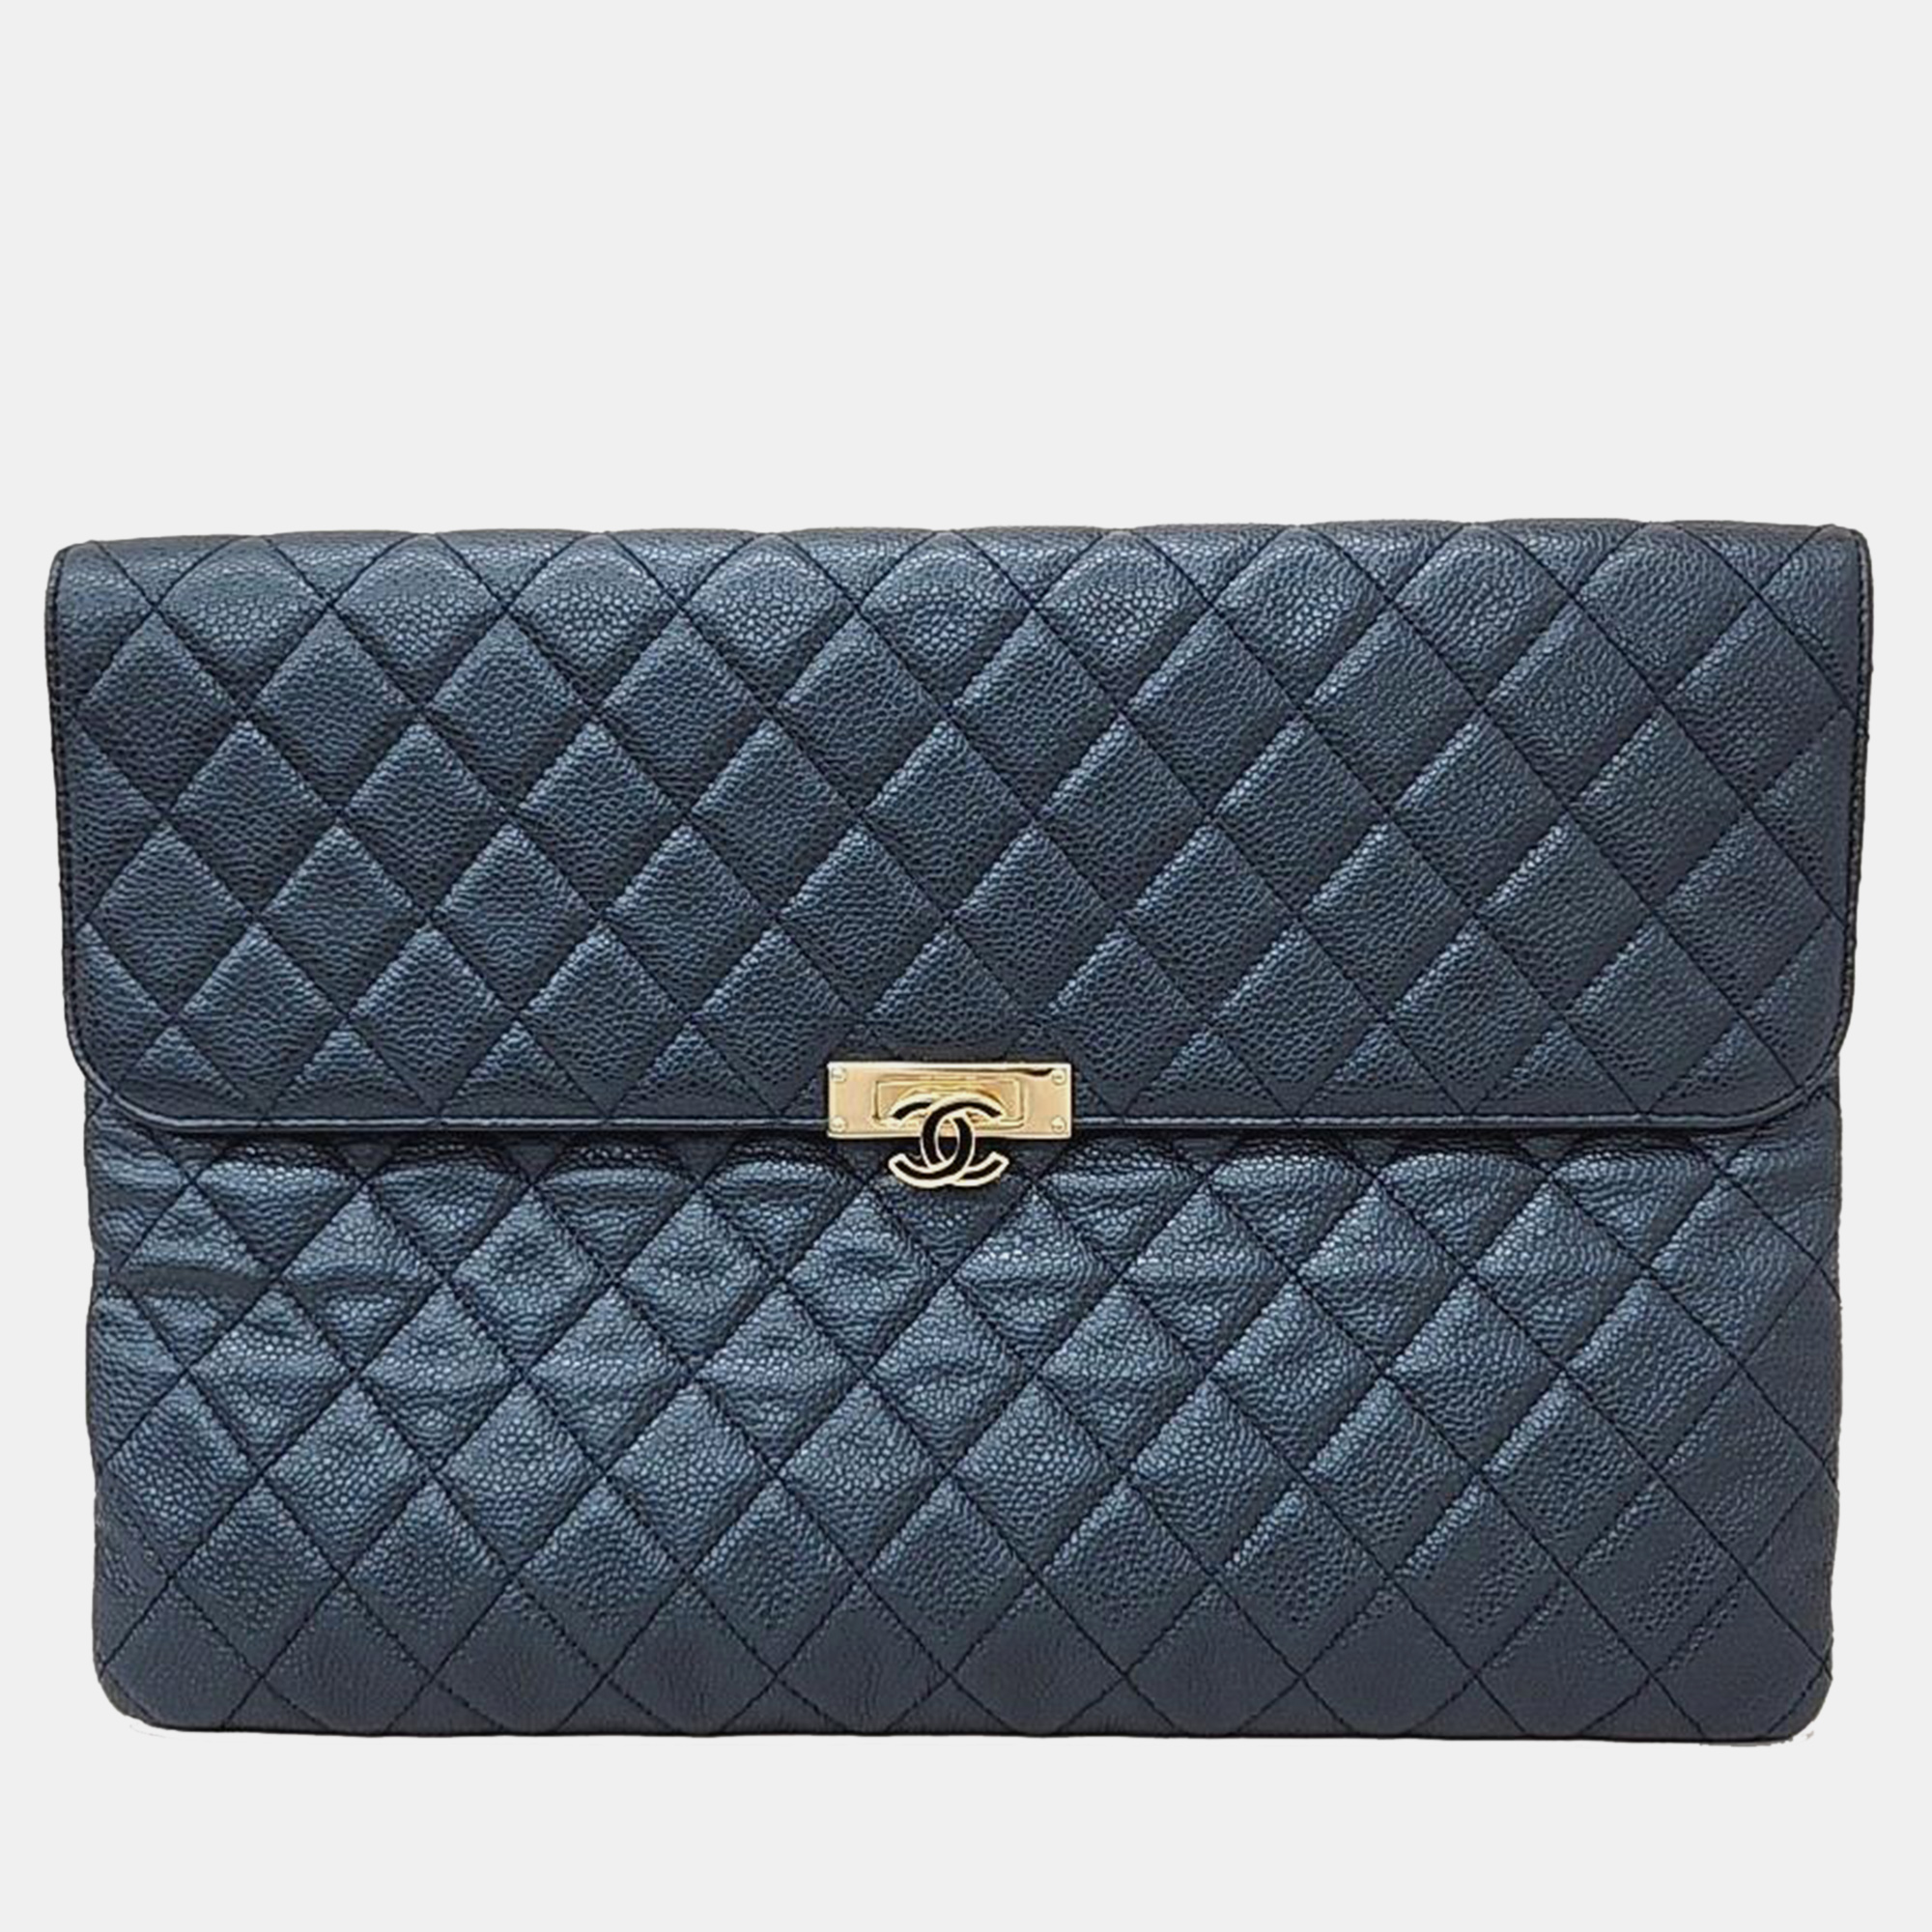 Chanel metallic blue caviar leather large flap clutch bag